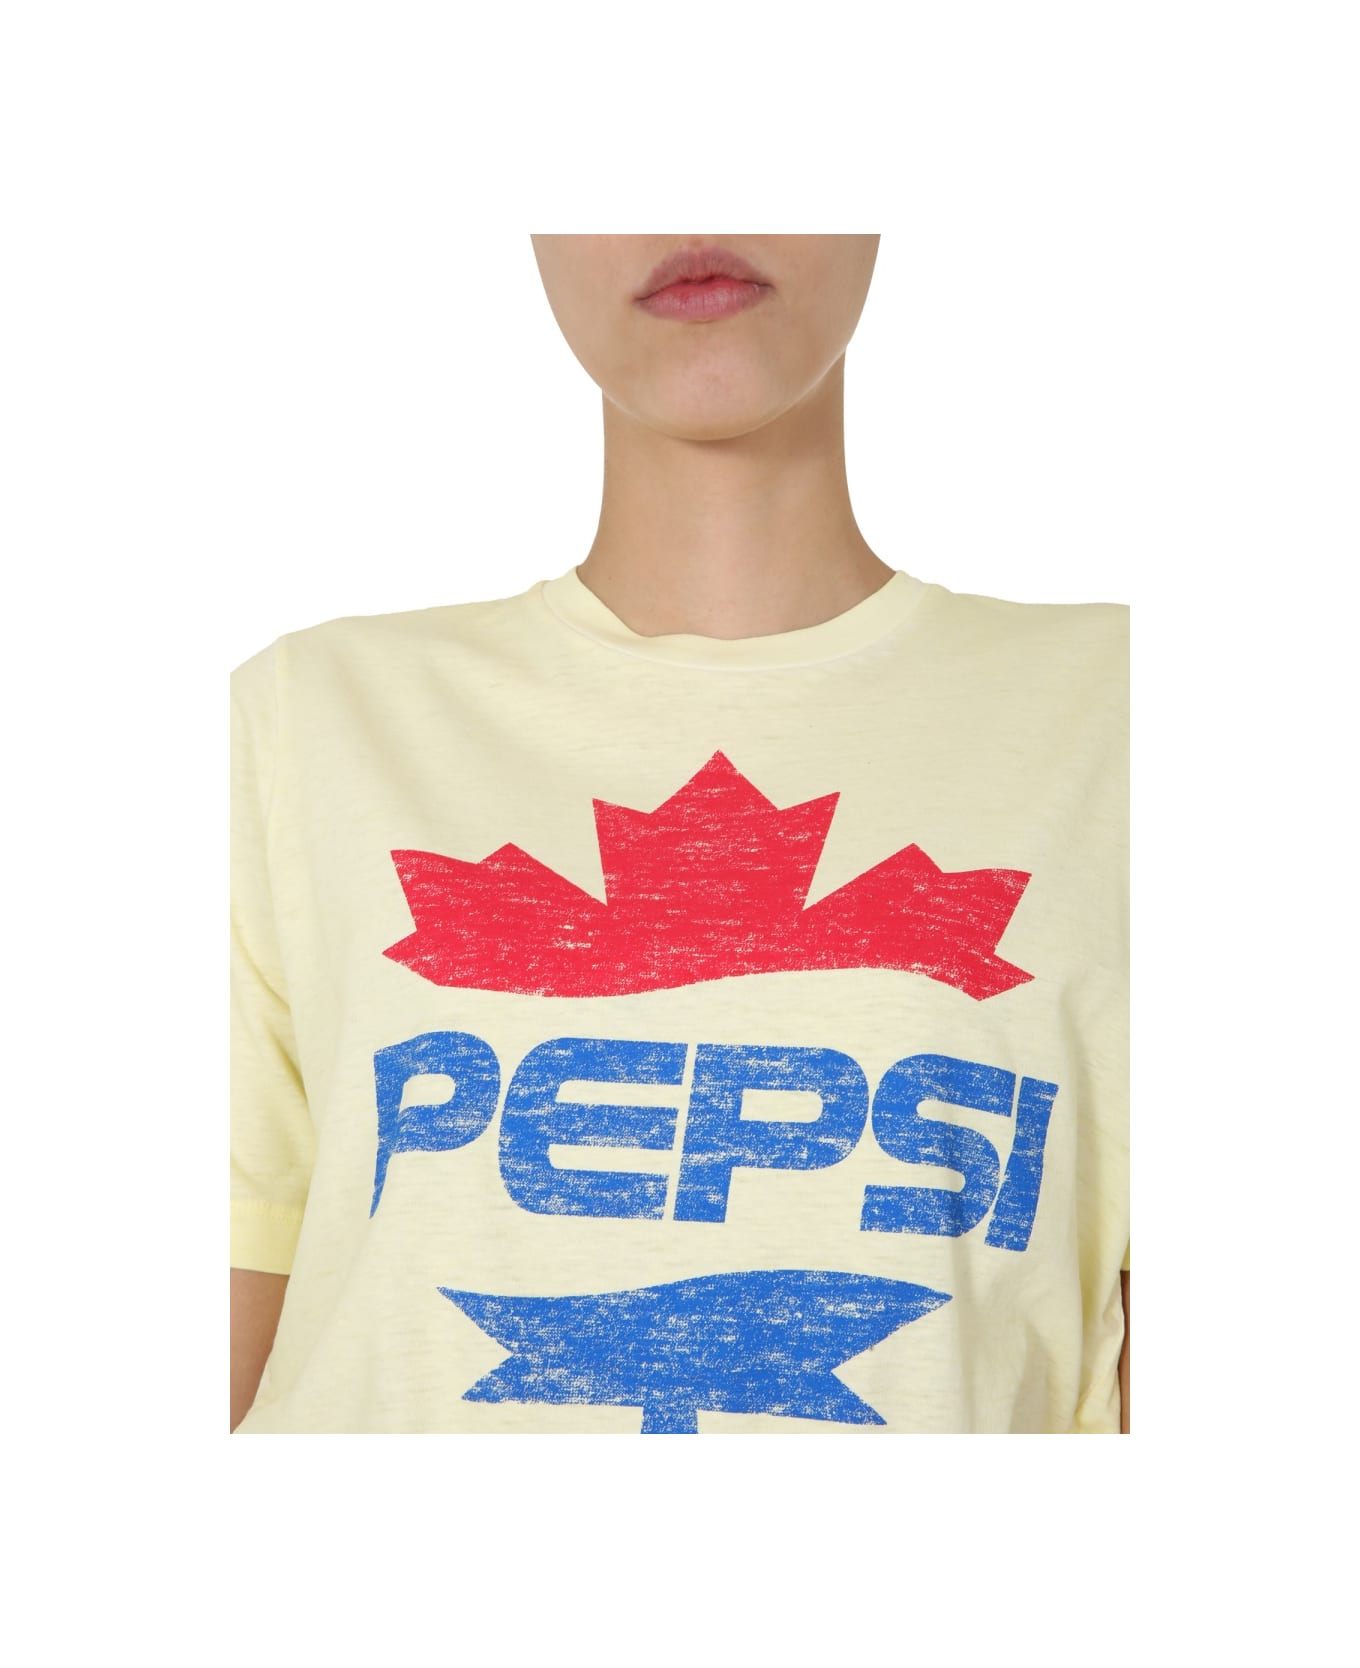 Dsquared2 "pepsi" T-shirt - YELLOW